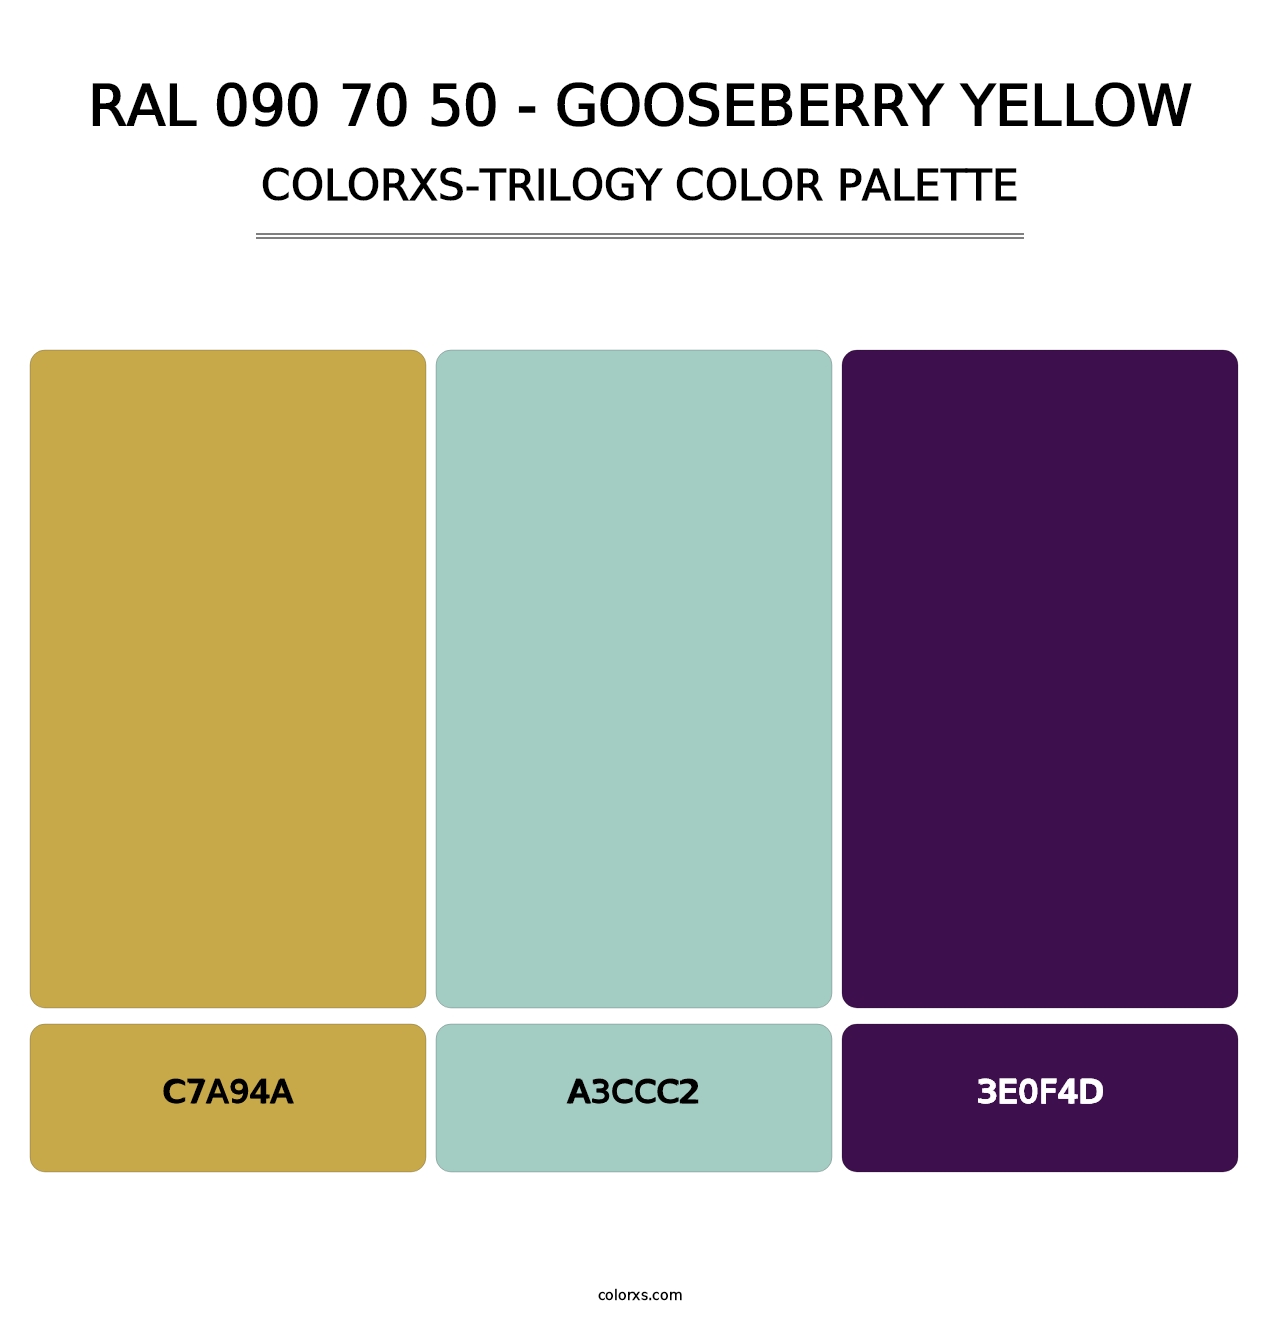 RAL 090 70 50 - Gooseberry Yellow - Colorxs Trilogy Palette